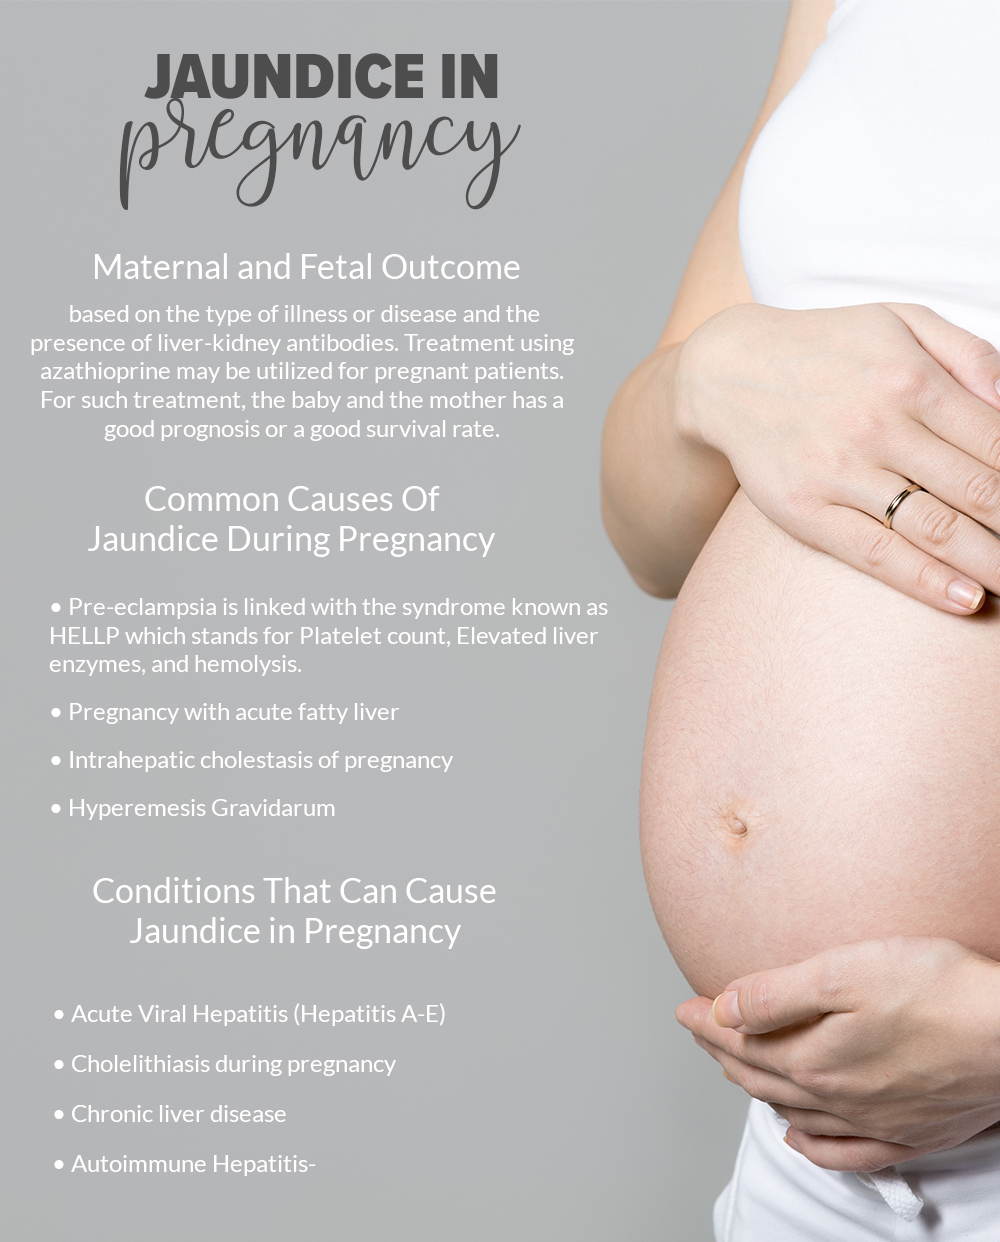 Common Causes Of Jaundice In Pregnancy